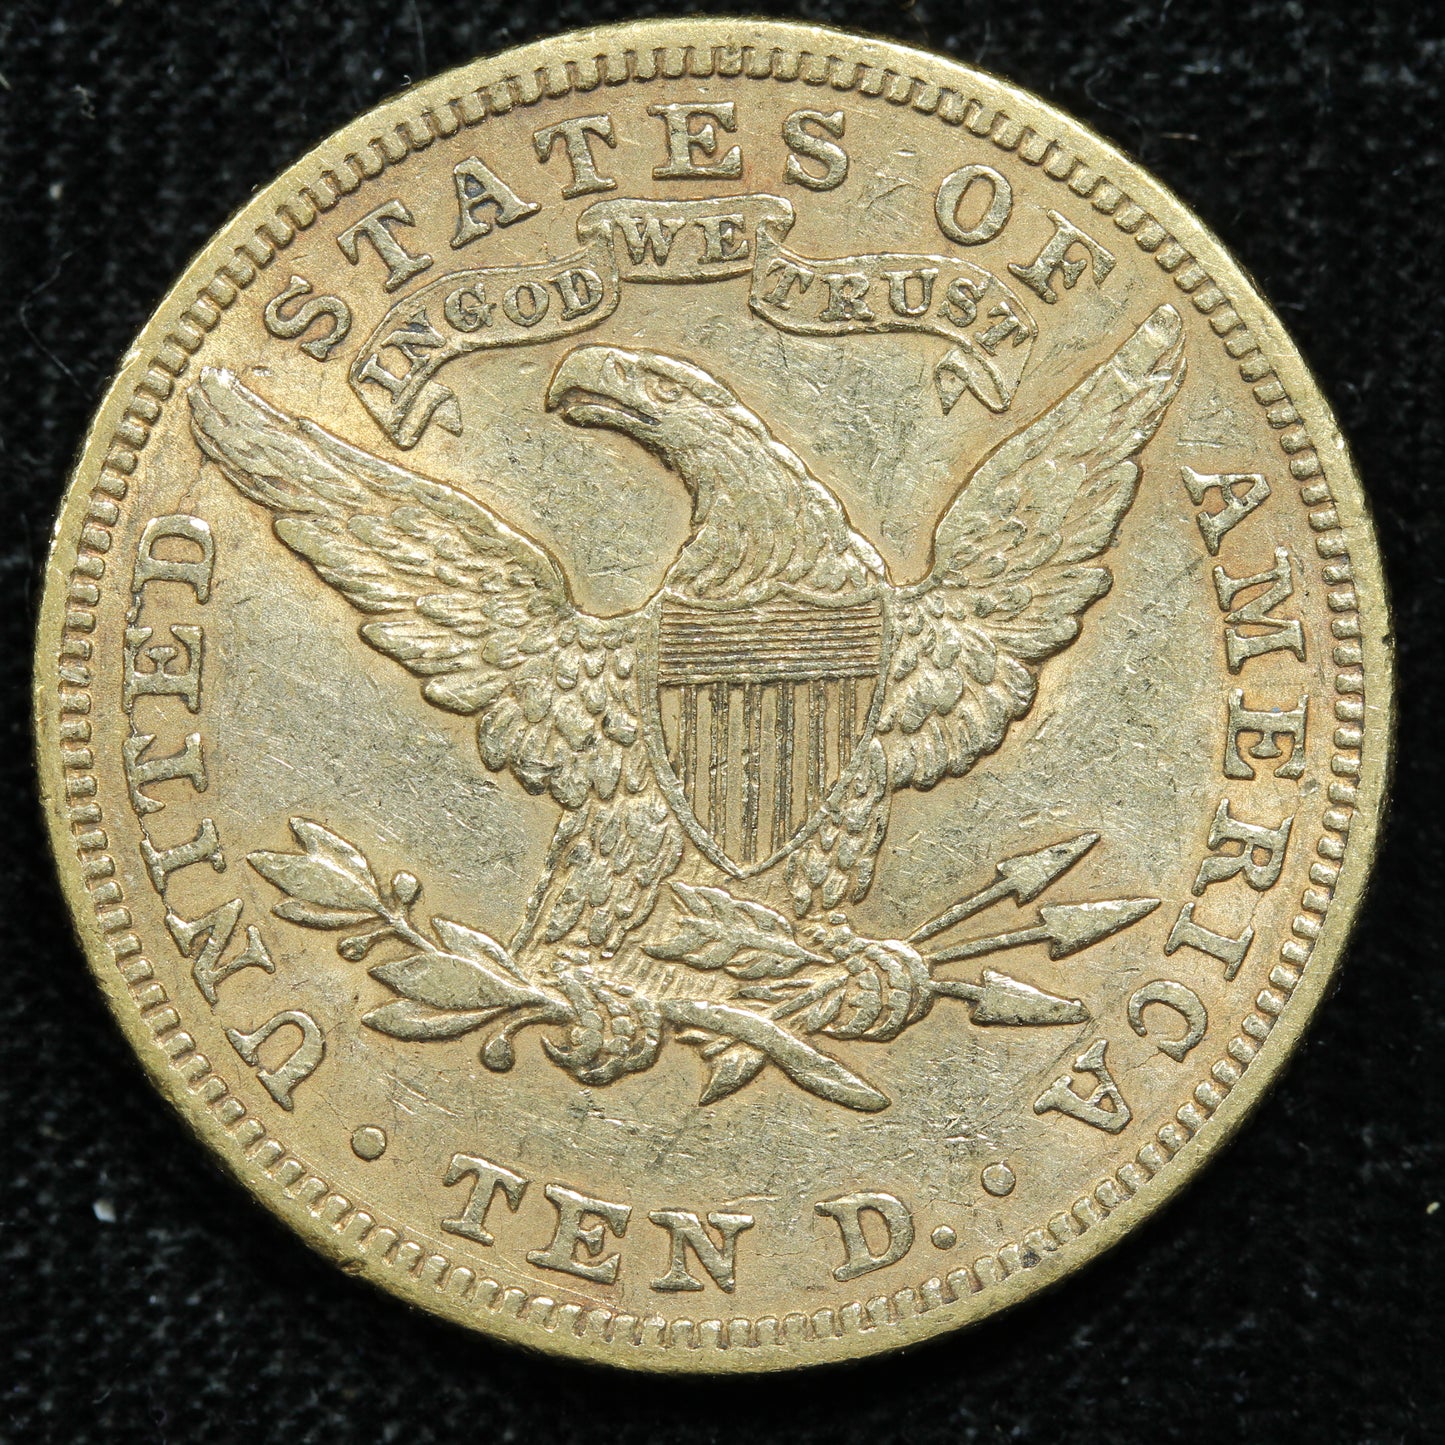 1897 (Philadelphia) $10 Liberty Head US Gold Eagle Coin (#2)